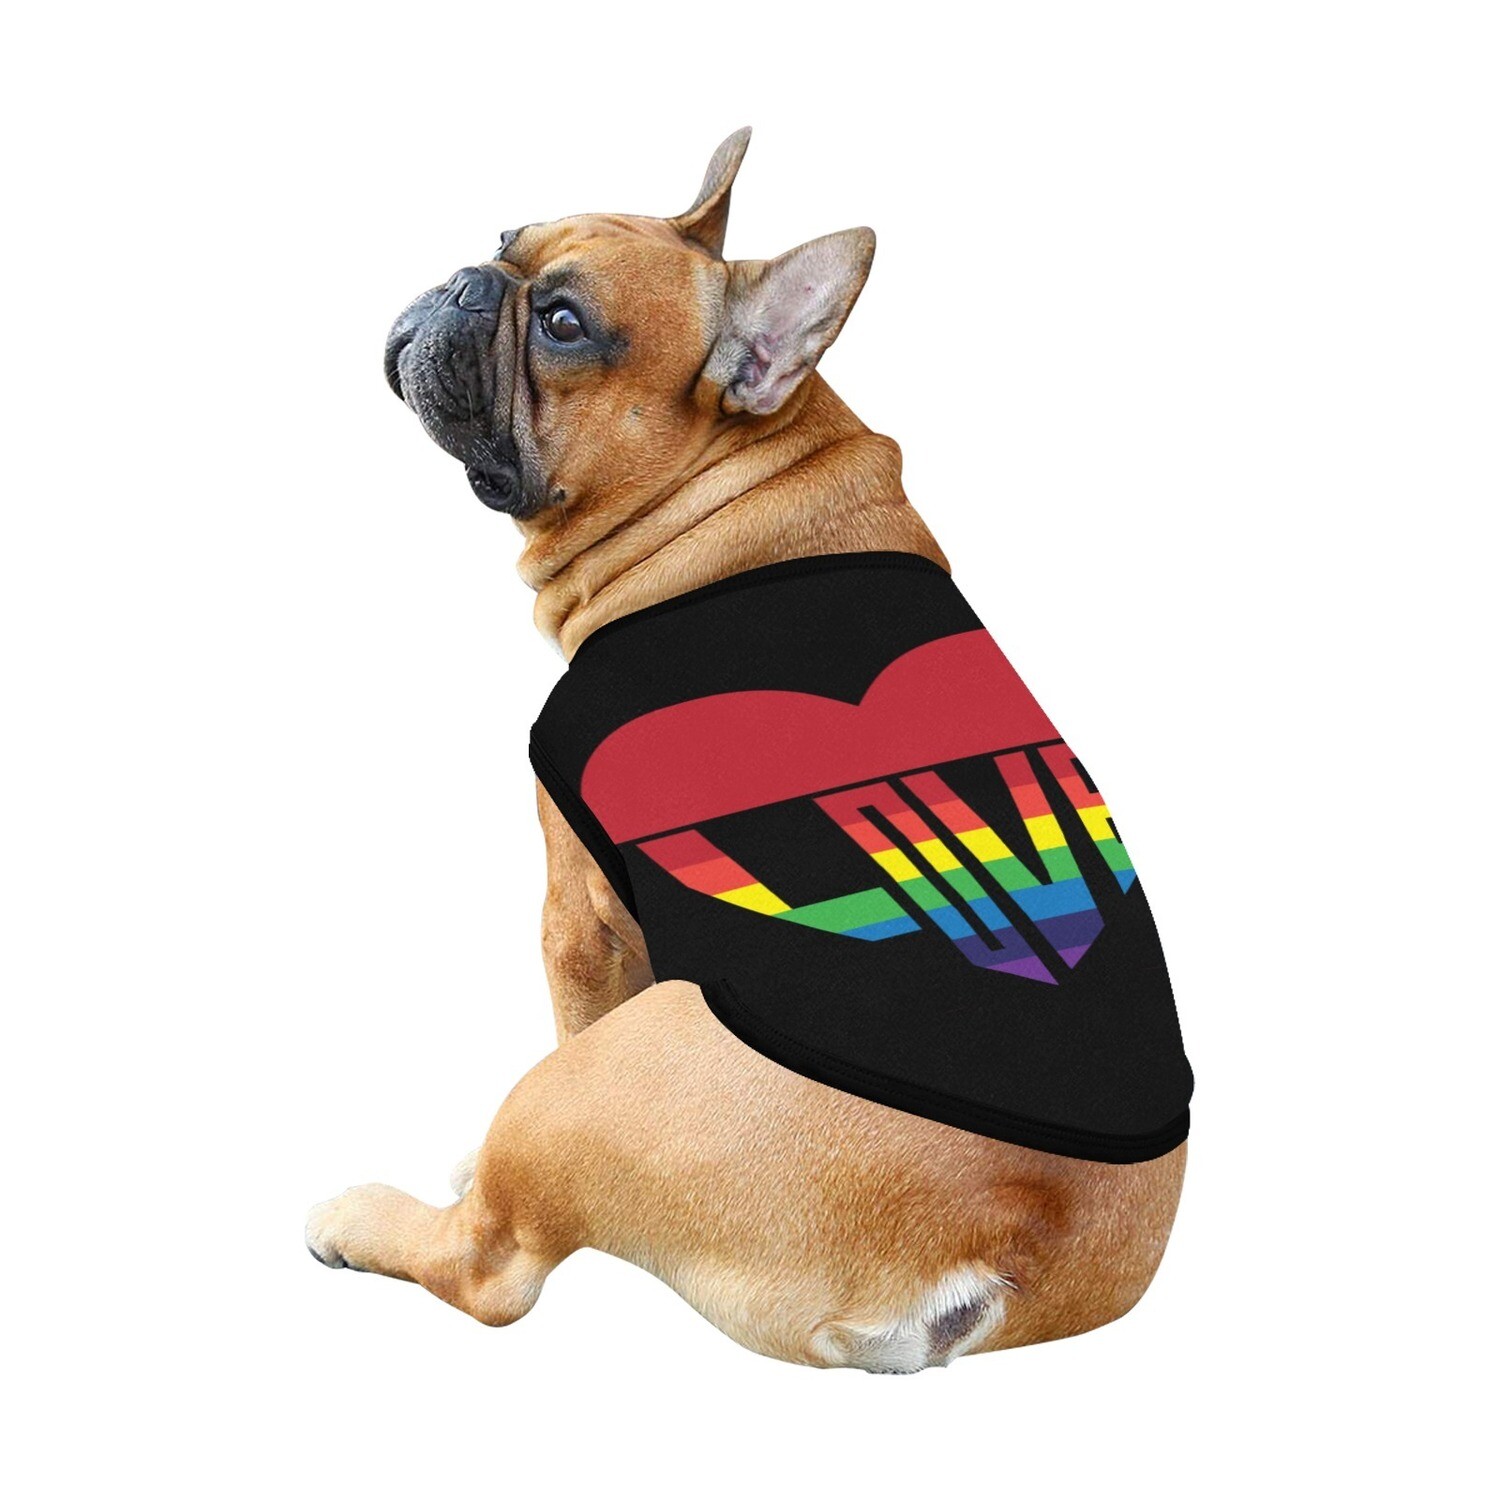 🐕🏳️‍🌈 Love is Love LGBTQ flag heart Dog t-shirt, Dog Tank Top, Dog shirt, Dog clothes, Gift, 7 sizes XS to 3XL, pride flag, rainbow flag